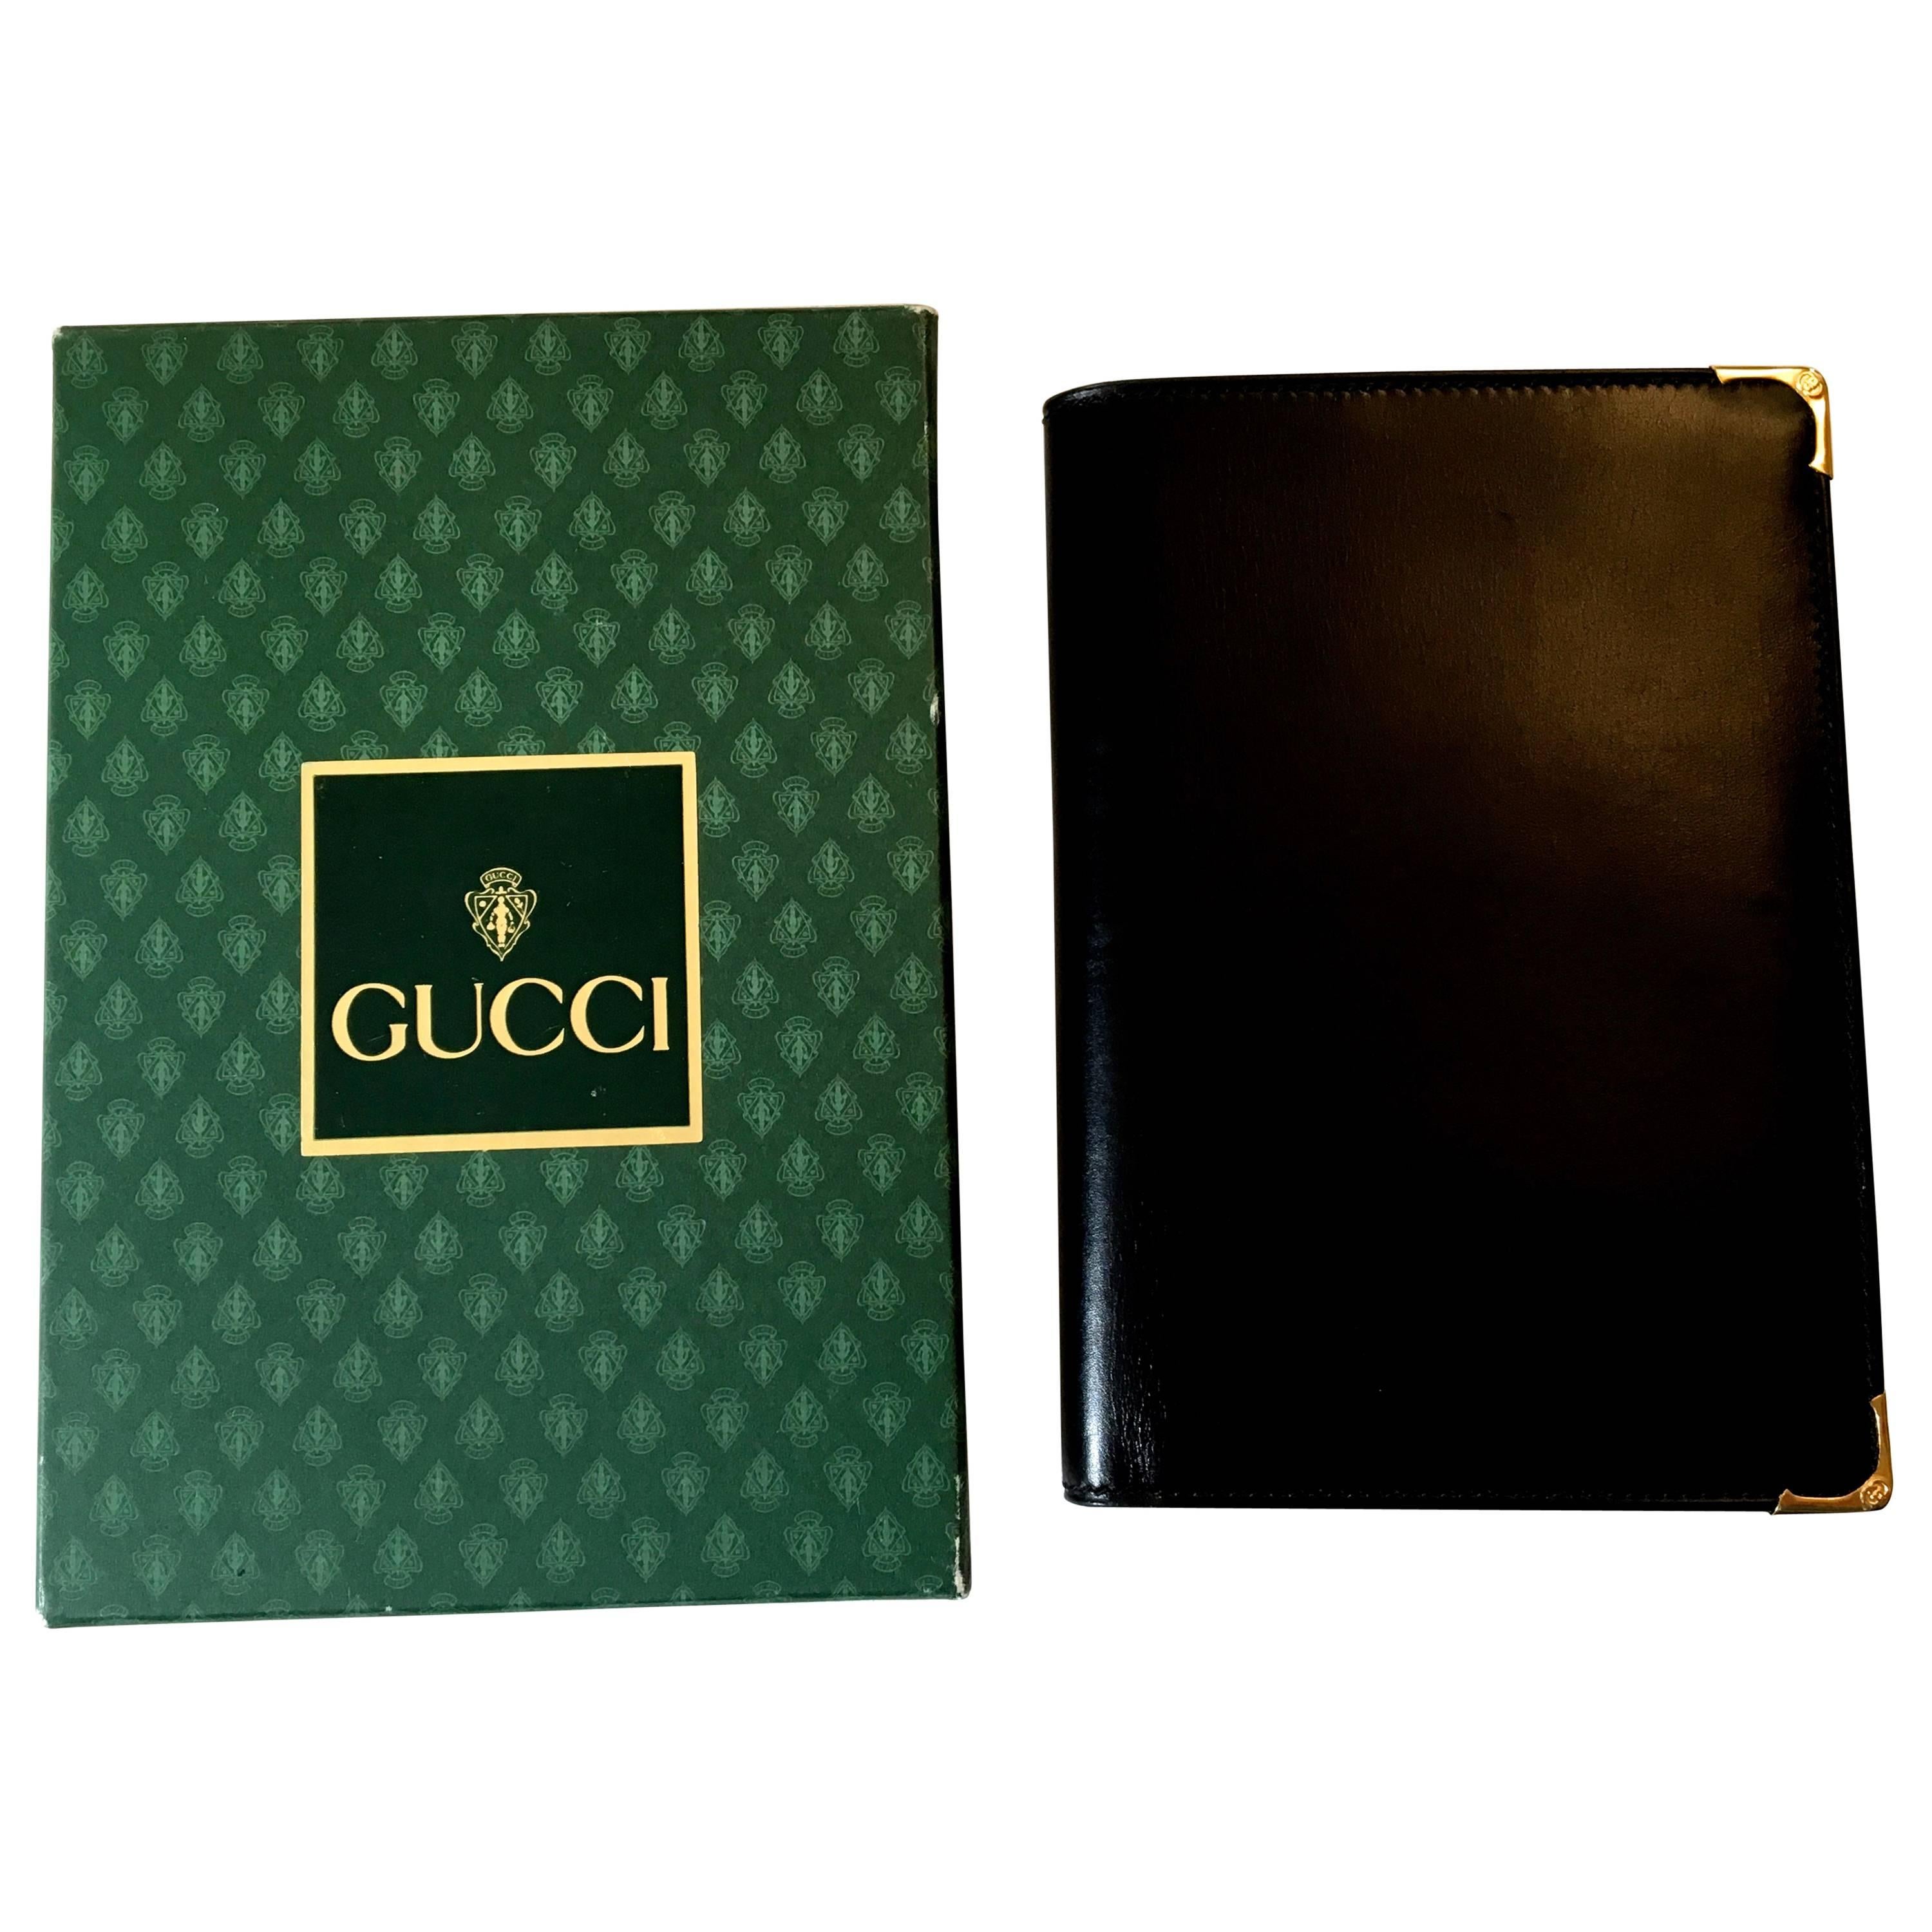 New Vintage Gucci Passport Holder / Business Wallet